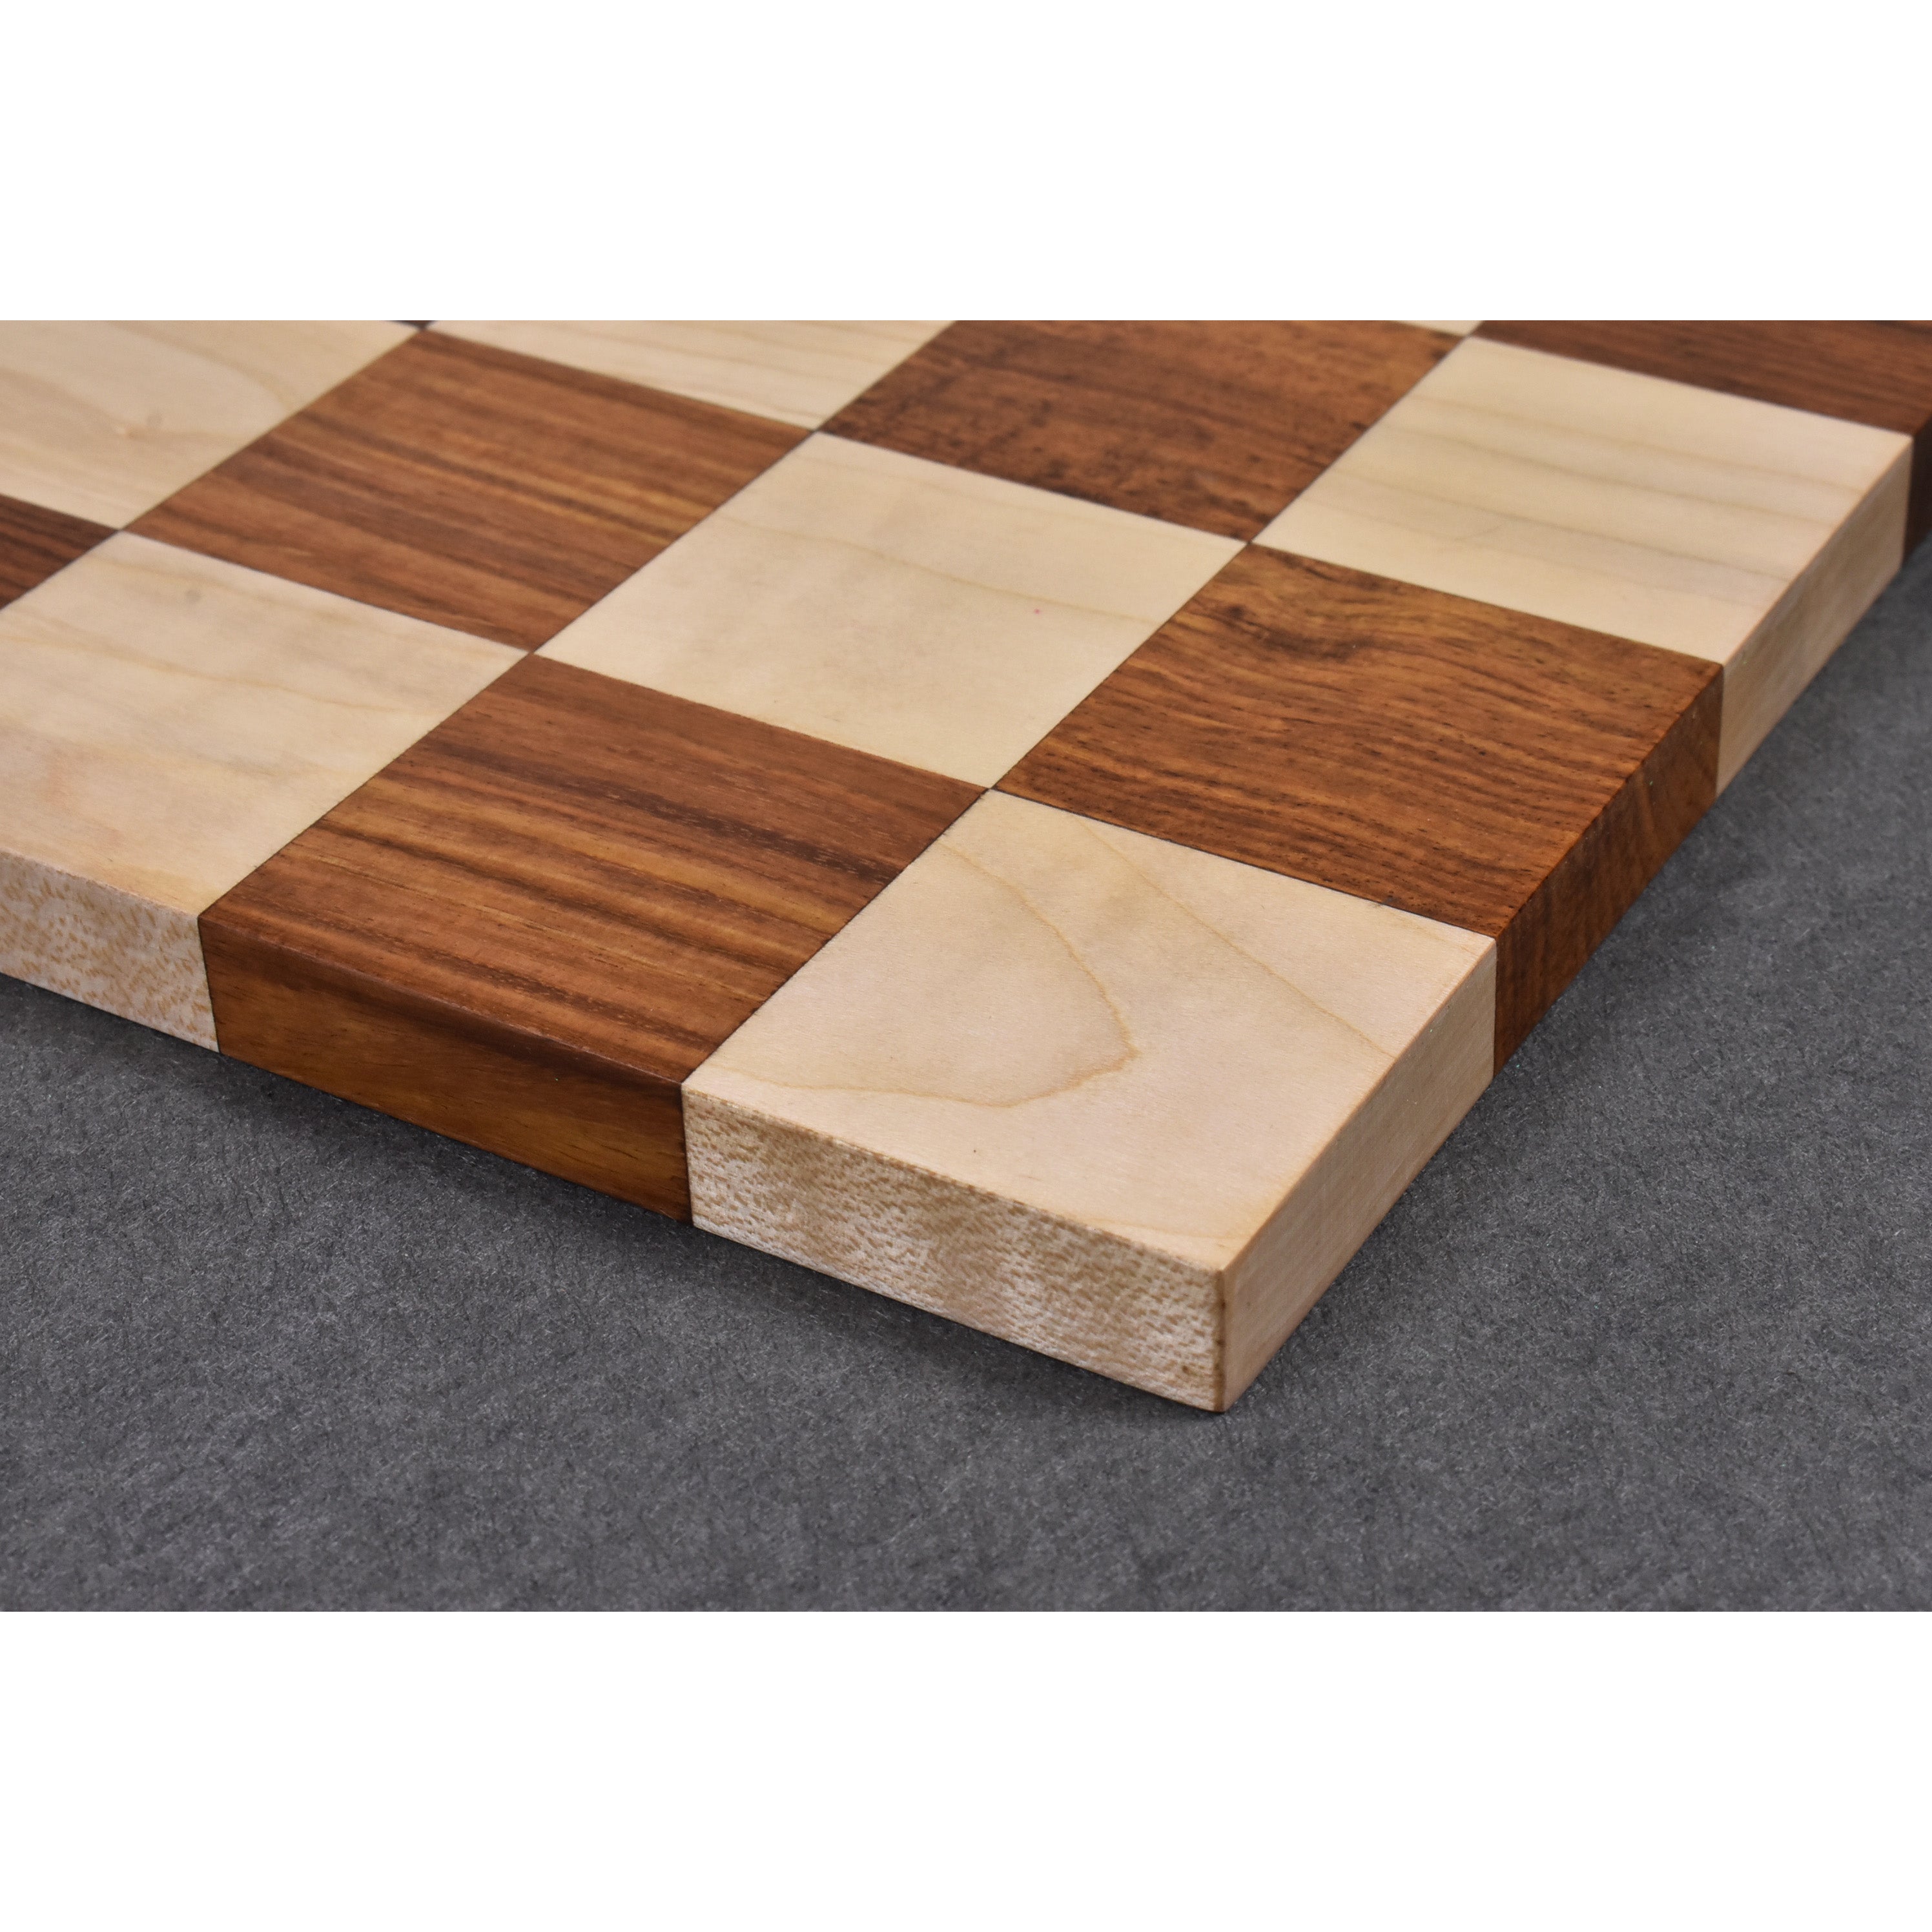 50mm Borderless Chess Board Golden Rosewood(Sheesham) & Maple BLACKFRIDAY  SALE